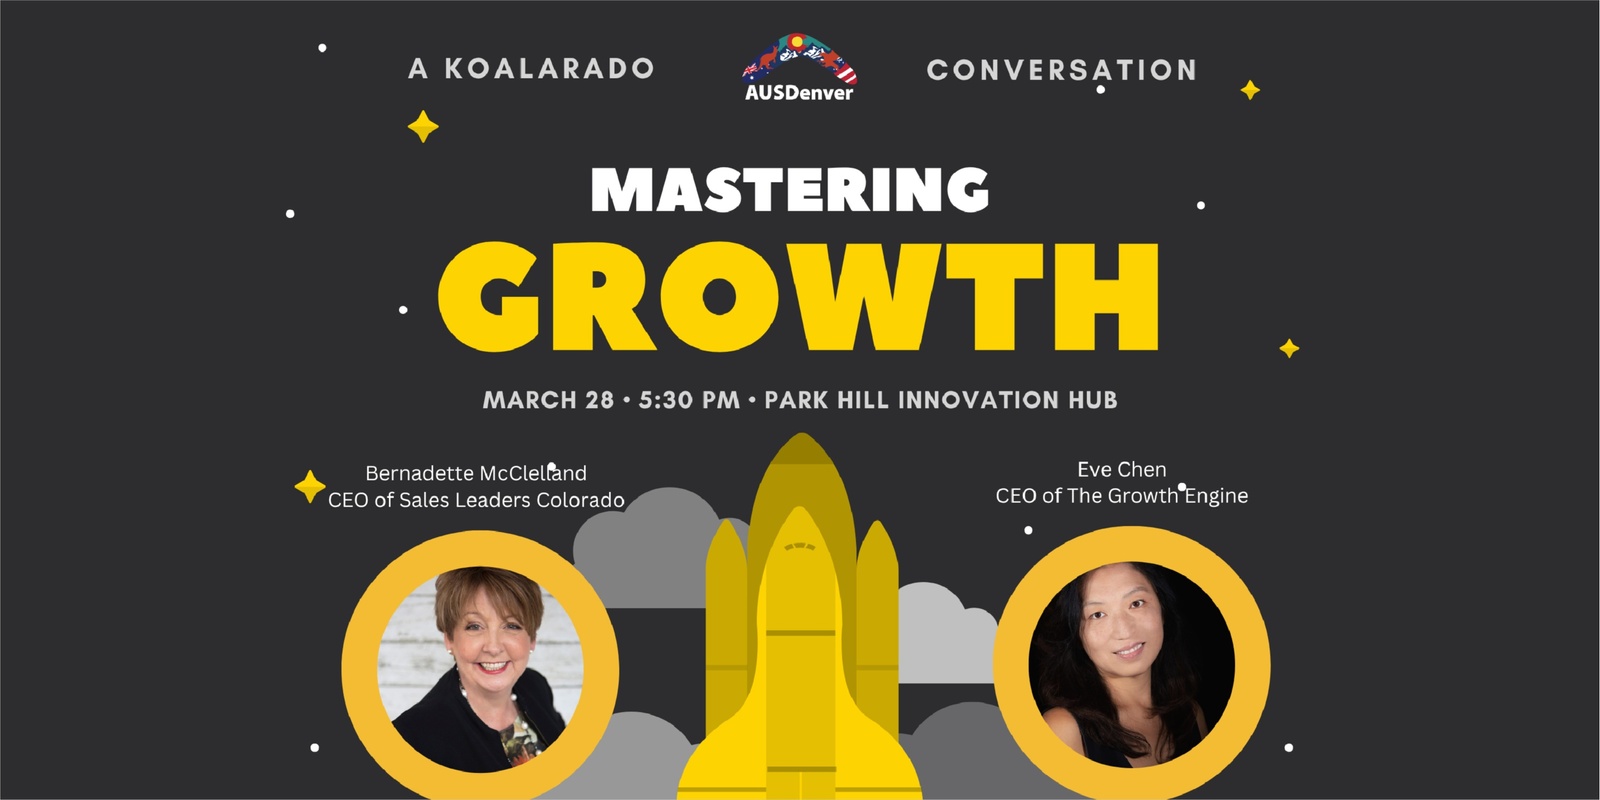 Banner image for AUSDenver Koalarado Conversation - Mastering Growth